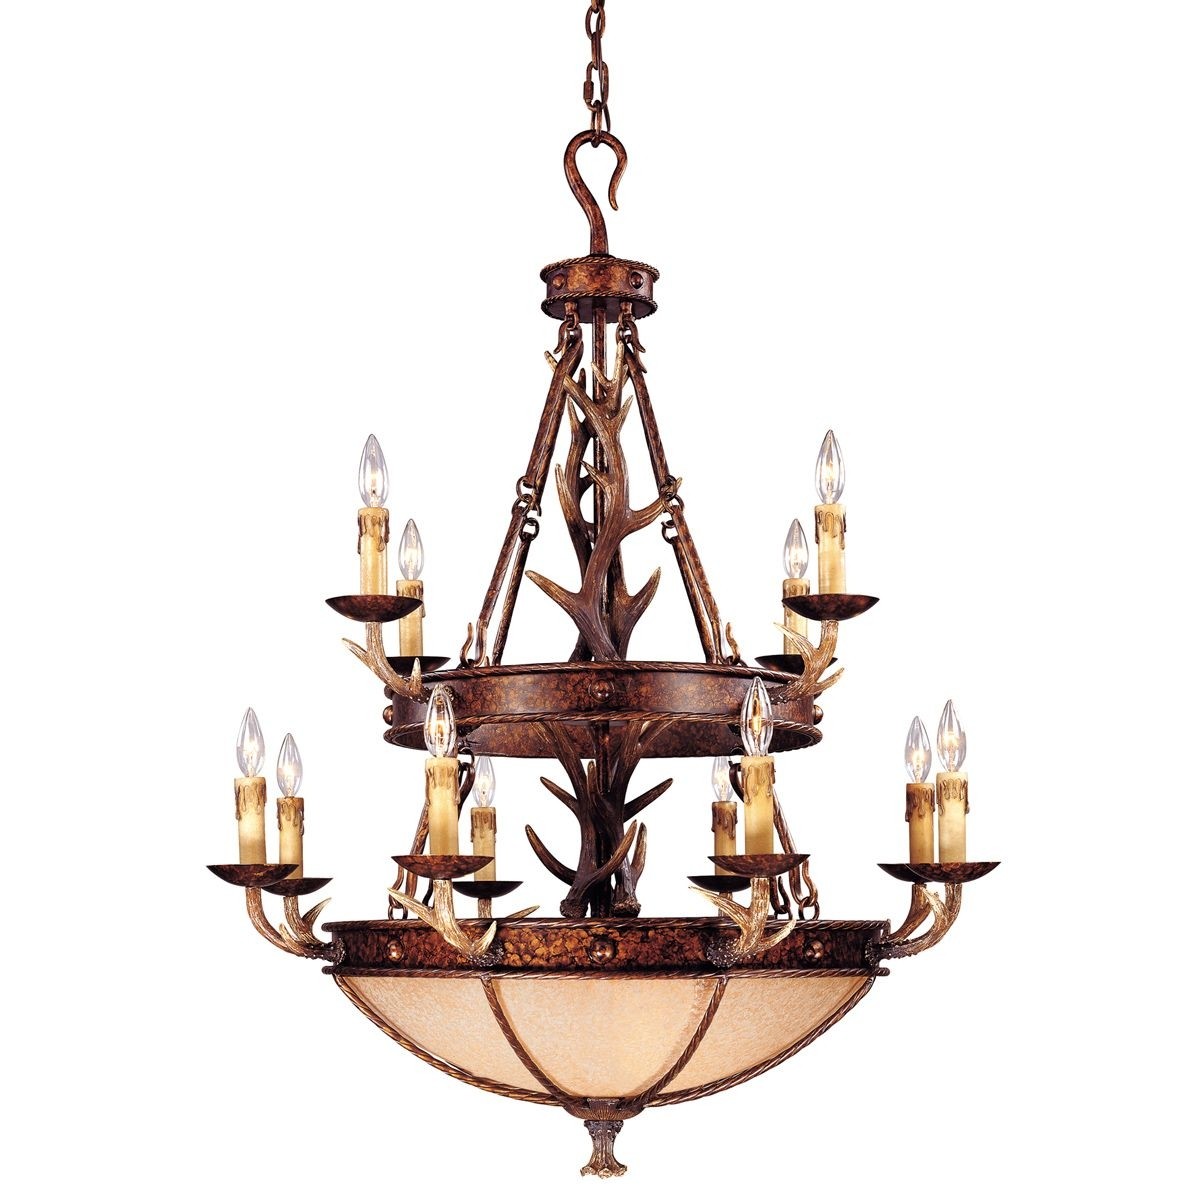 Large rustic chandeliers brand lighting discount lighting call brand lighting